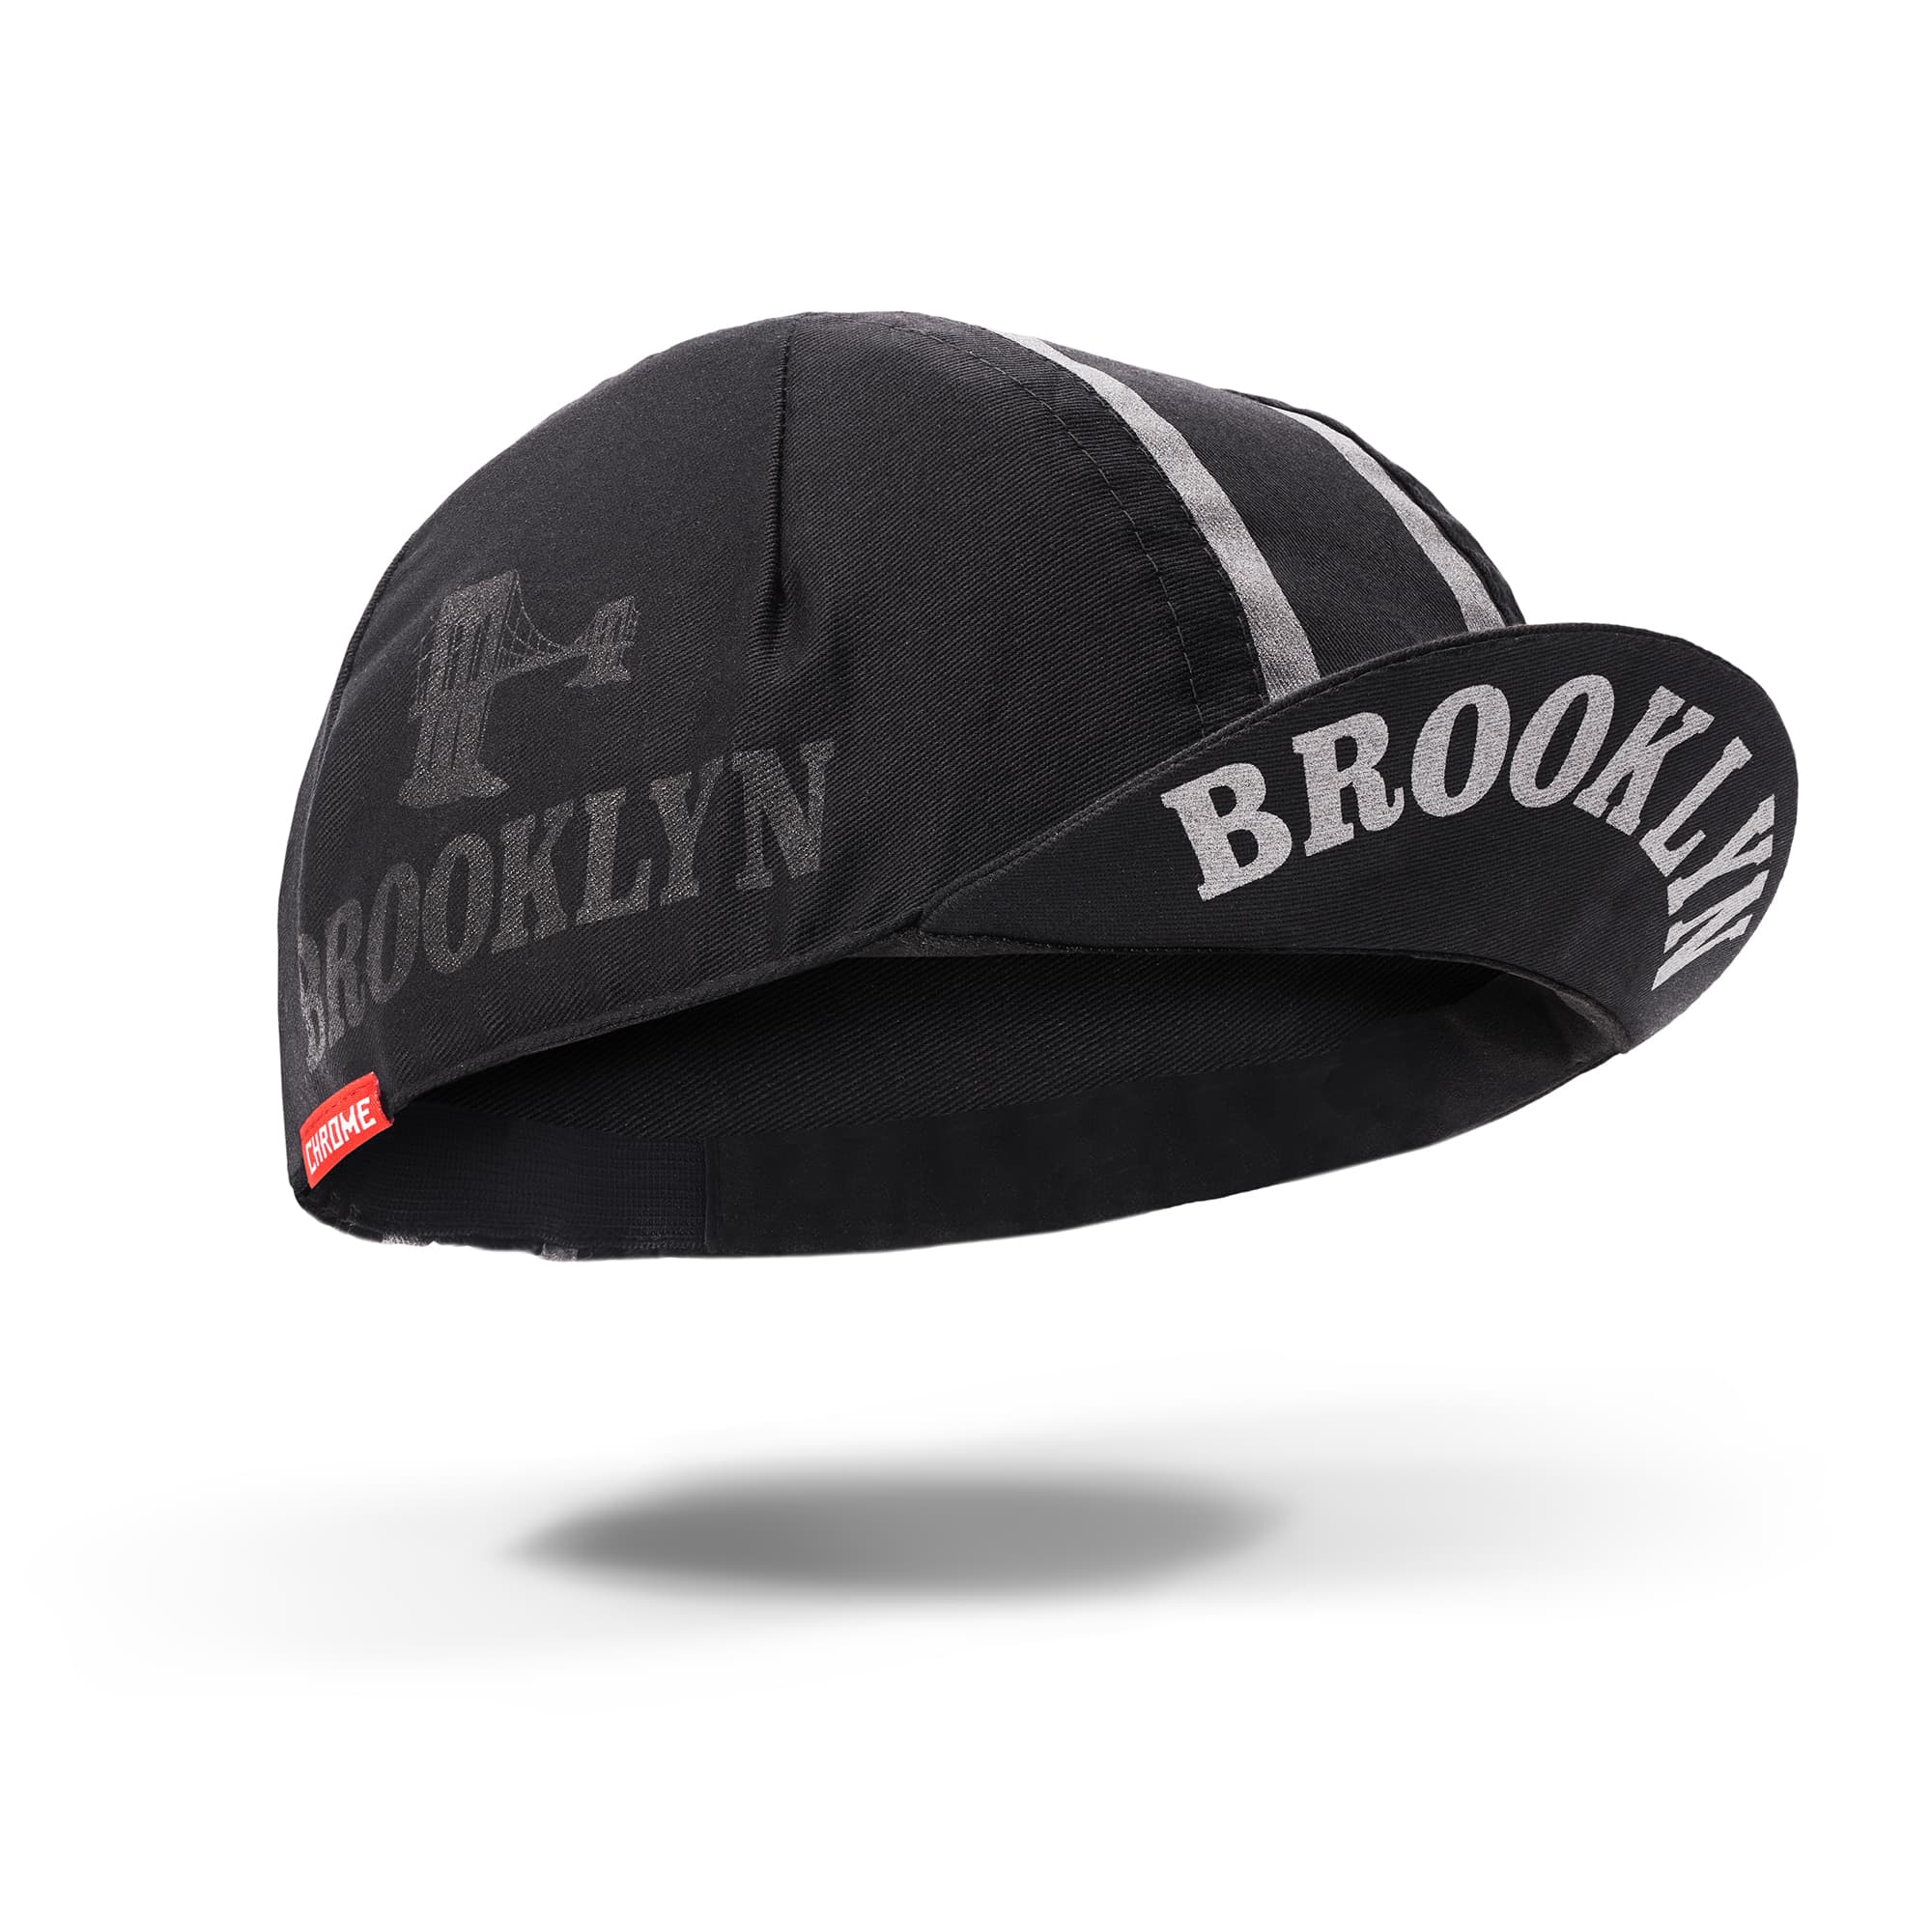 Chrome x Brooklyn Cycling Cap flap view #color_black